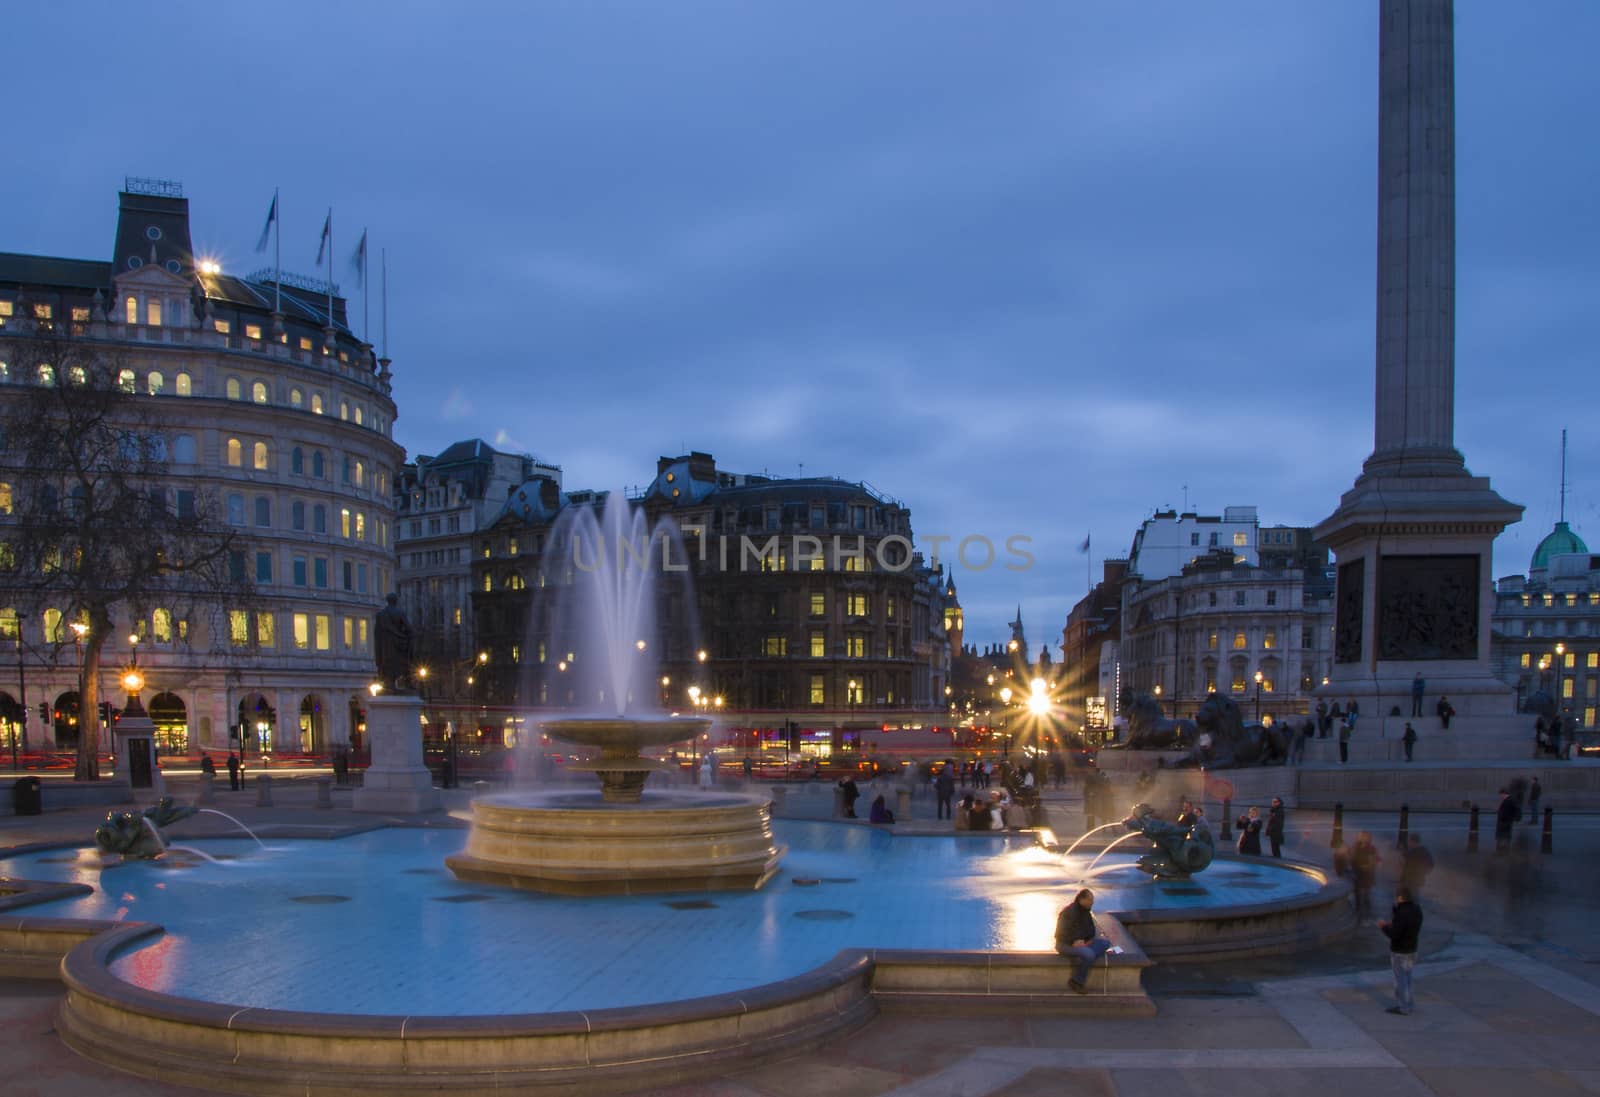 Trafalgar Square in the blue hour. London, UK